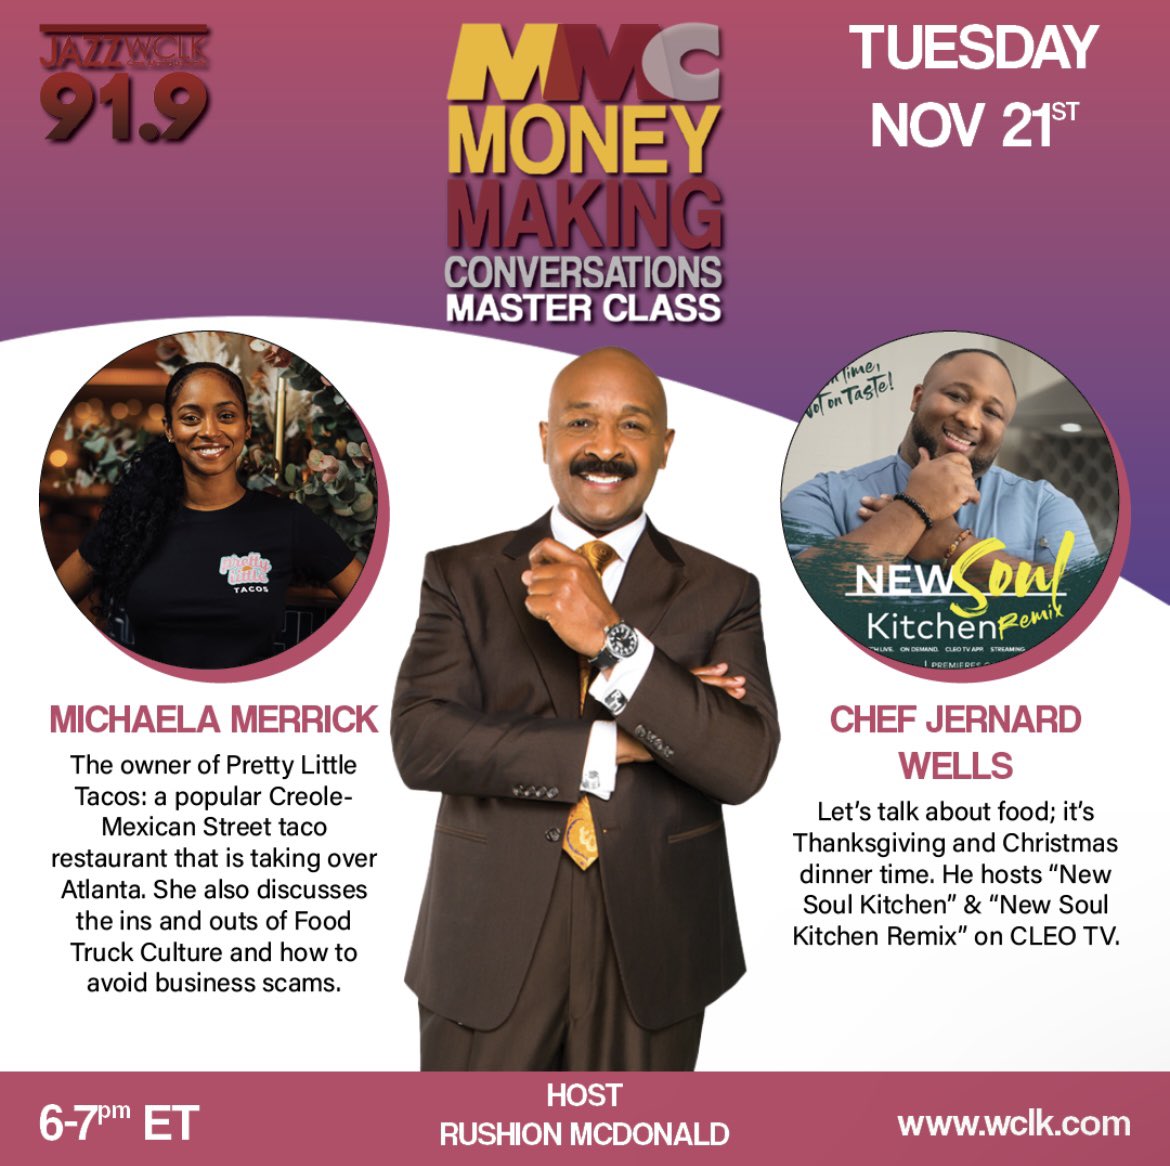 Tonight!! @RushionMcDonald and #MoneyMakingConversations 🎧Listen LIVE at 91.9 FM and WCLK.com